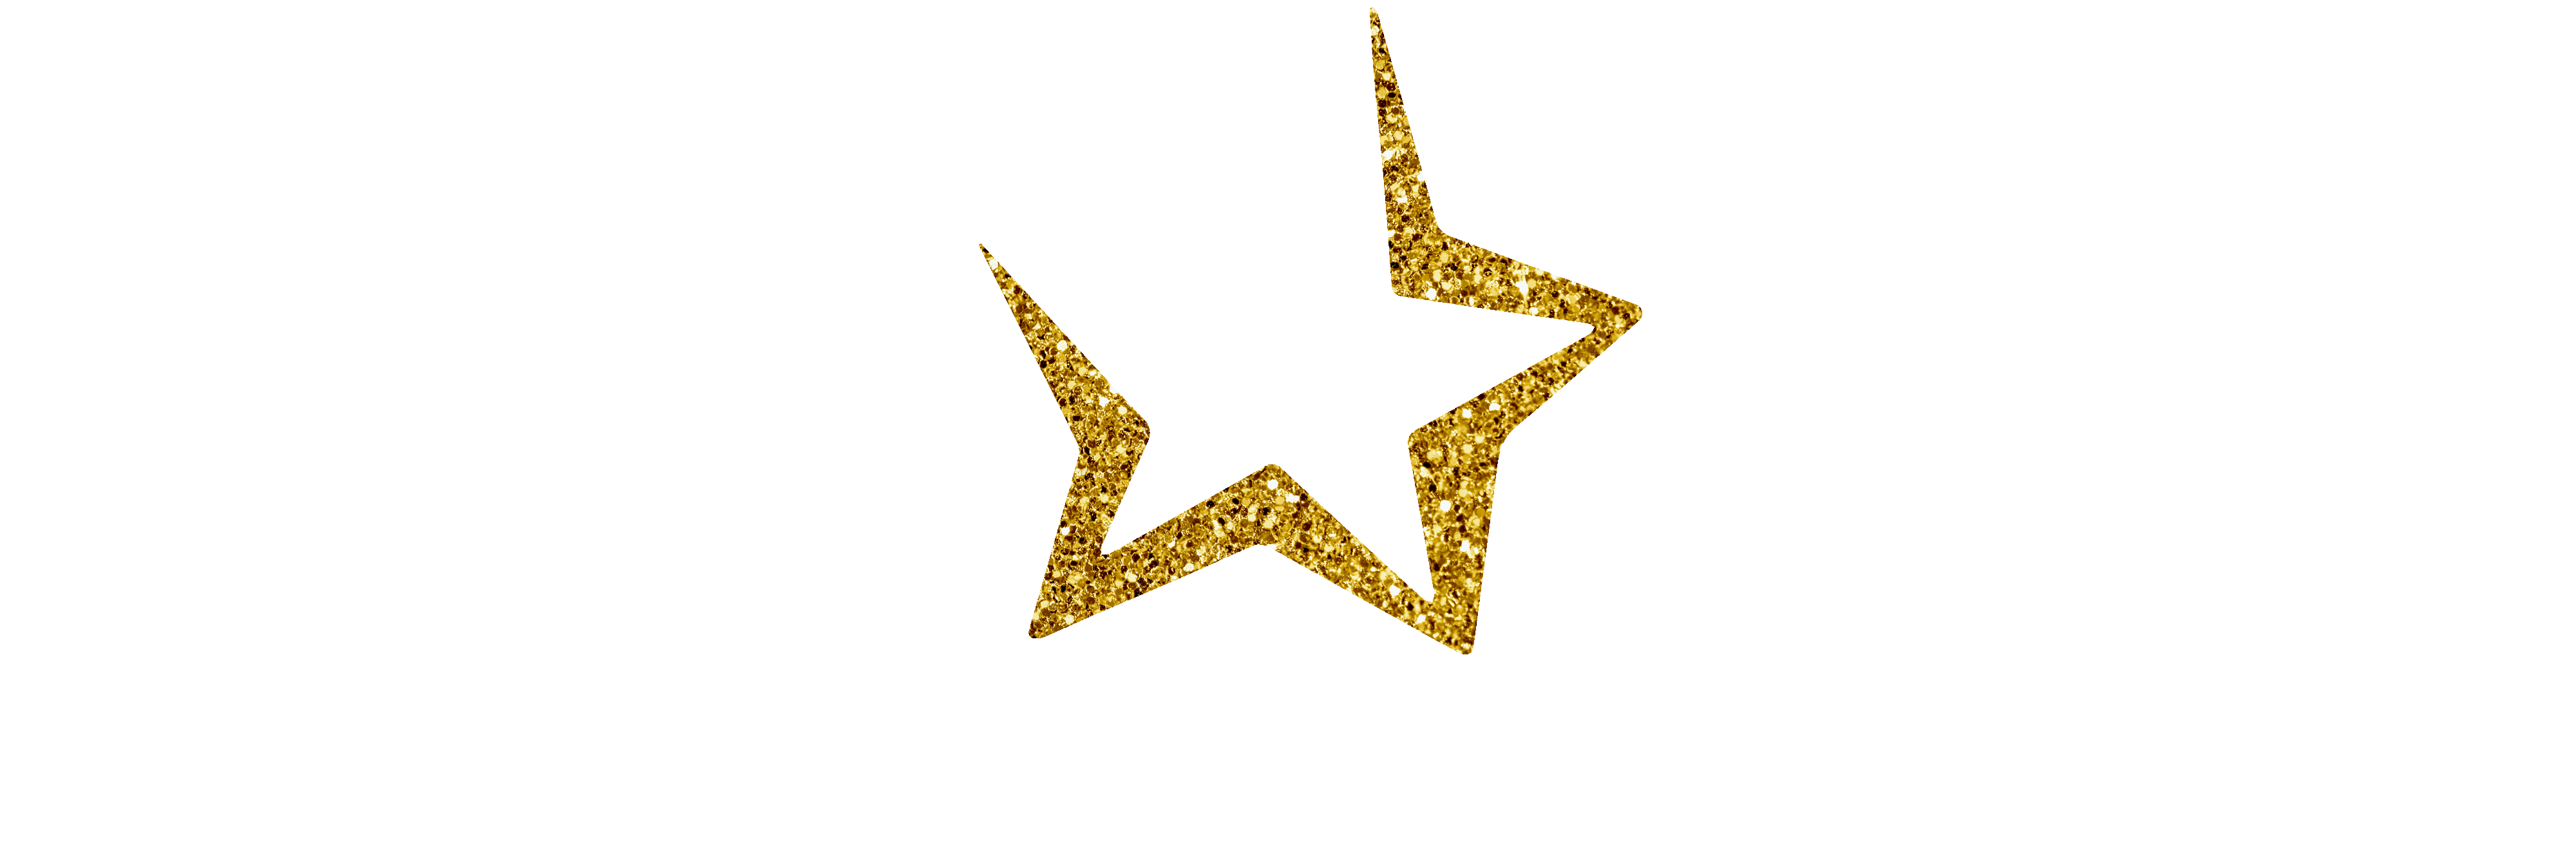 Saco Valley Gymnastics & Training Center – Training Champions For Life!